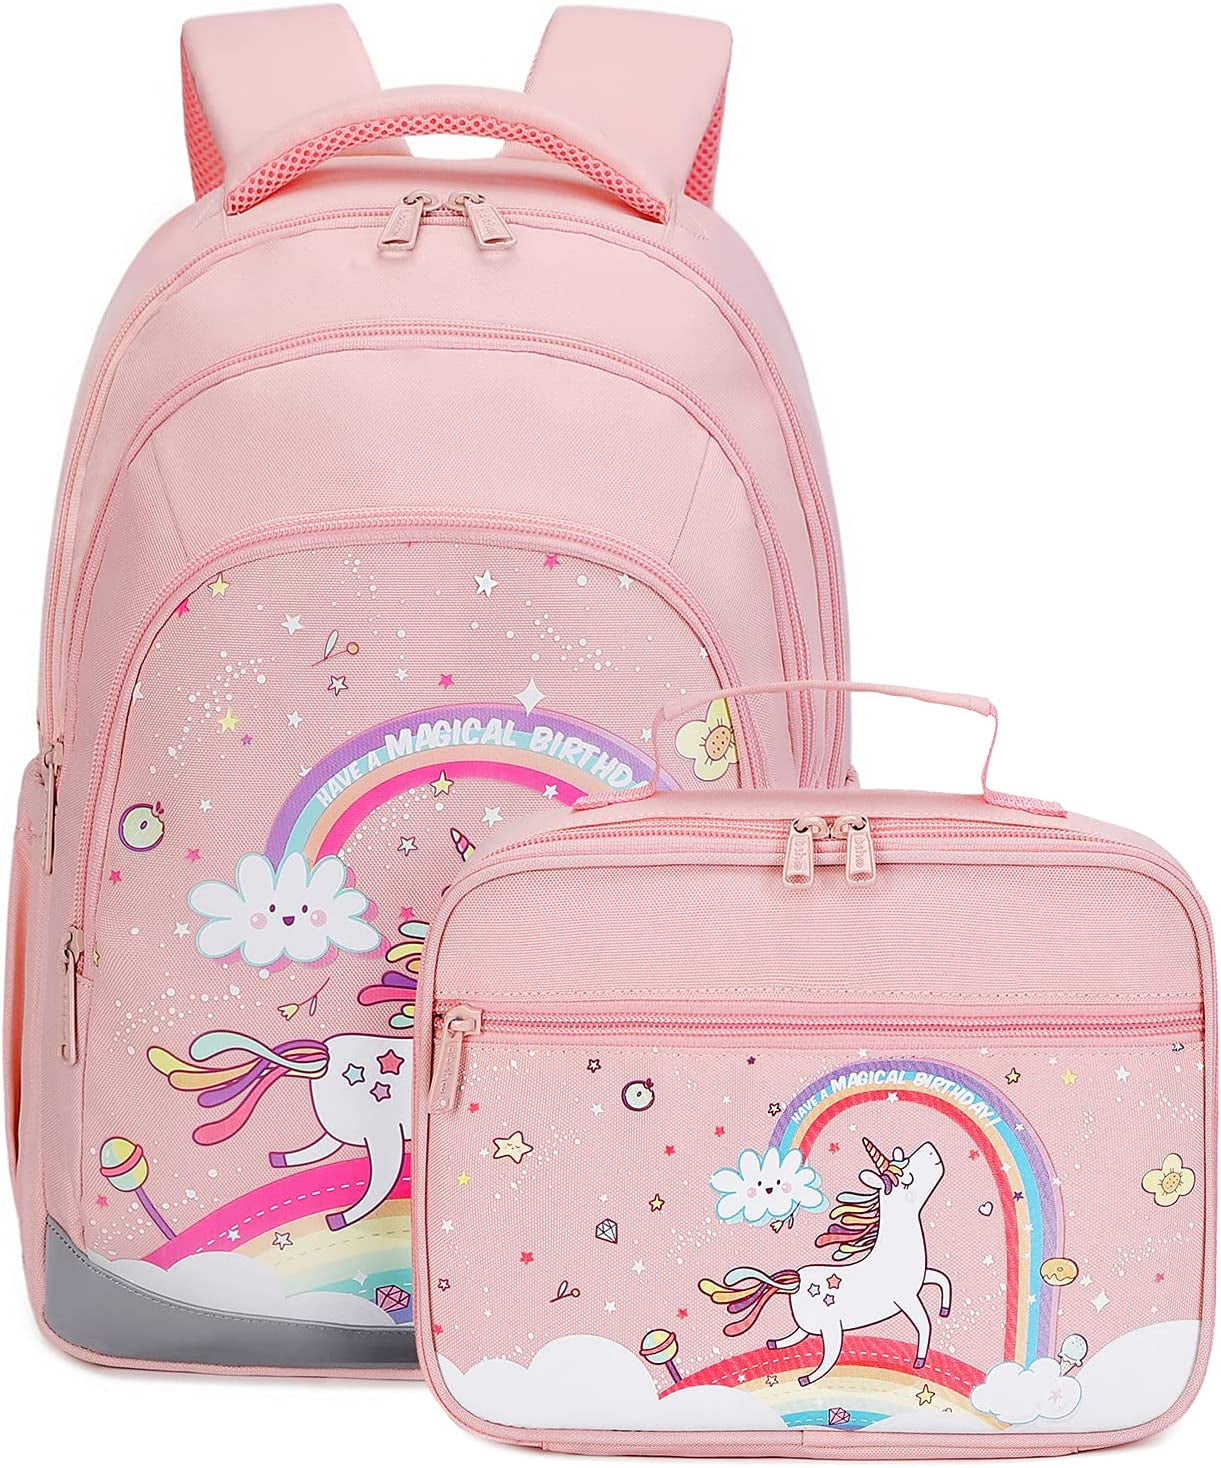 Cute Kids Backpack for Girls Kindergarten Elementary Unicorn School Backpacks Set with Lunch Box (Unicorn Dark Pink)